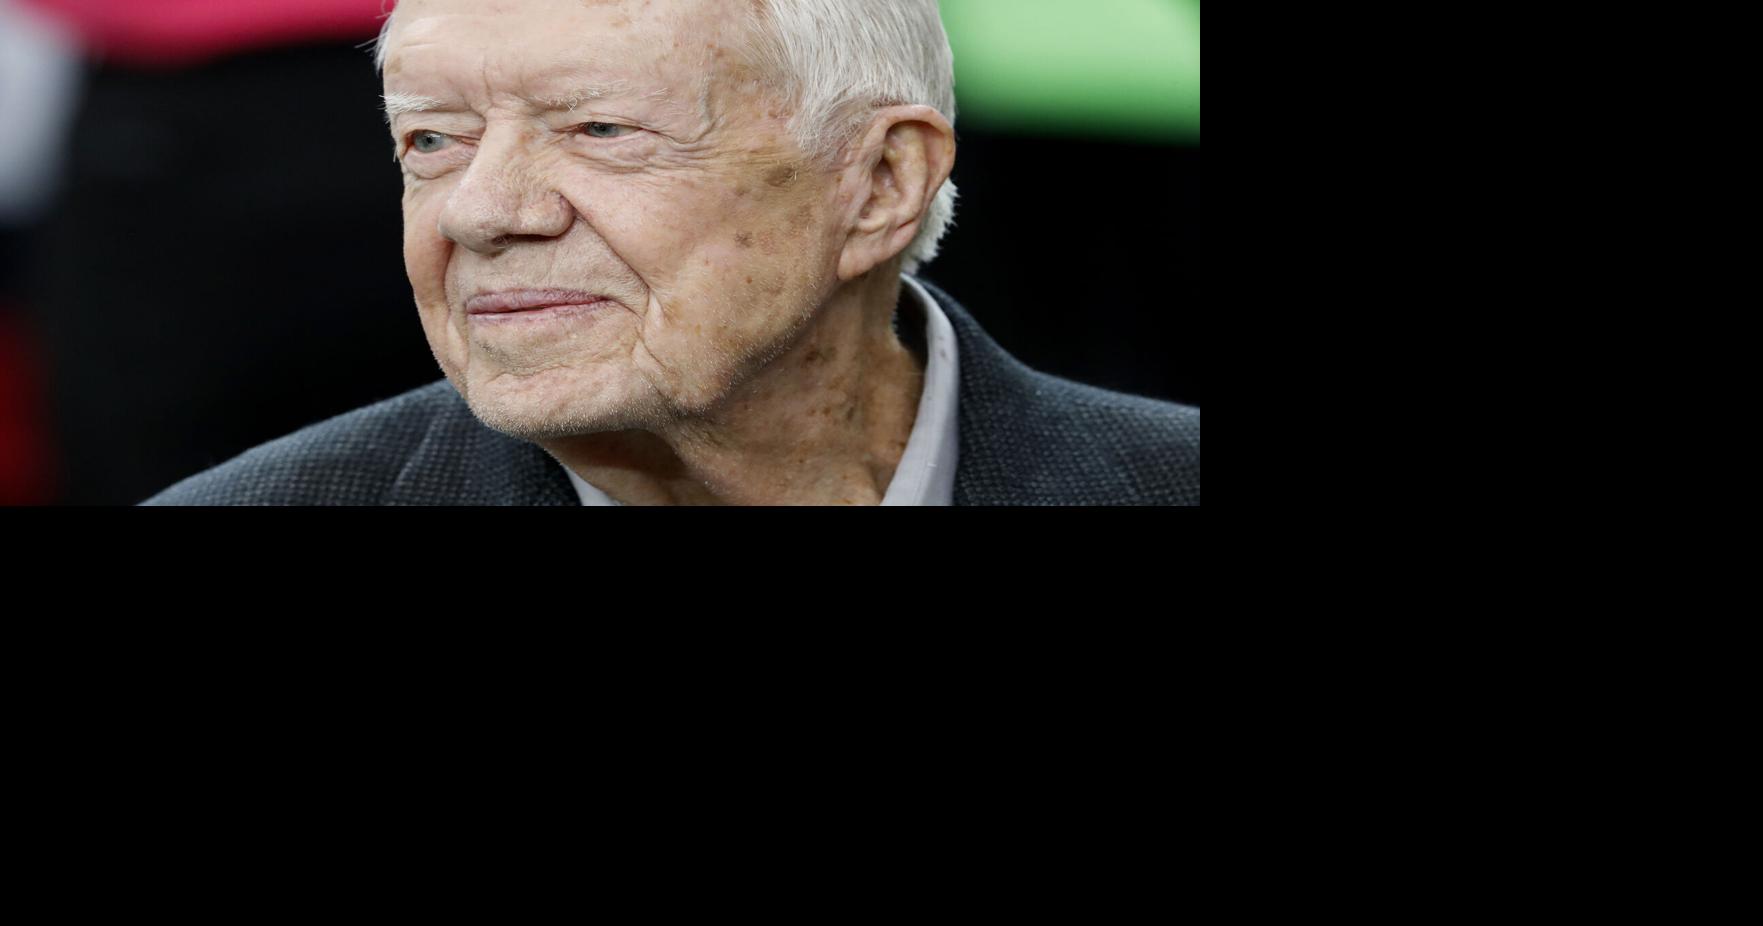 Former President Jimmy Carter enters hospice care, Alex Murdaugh